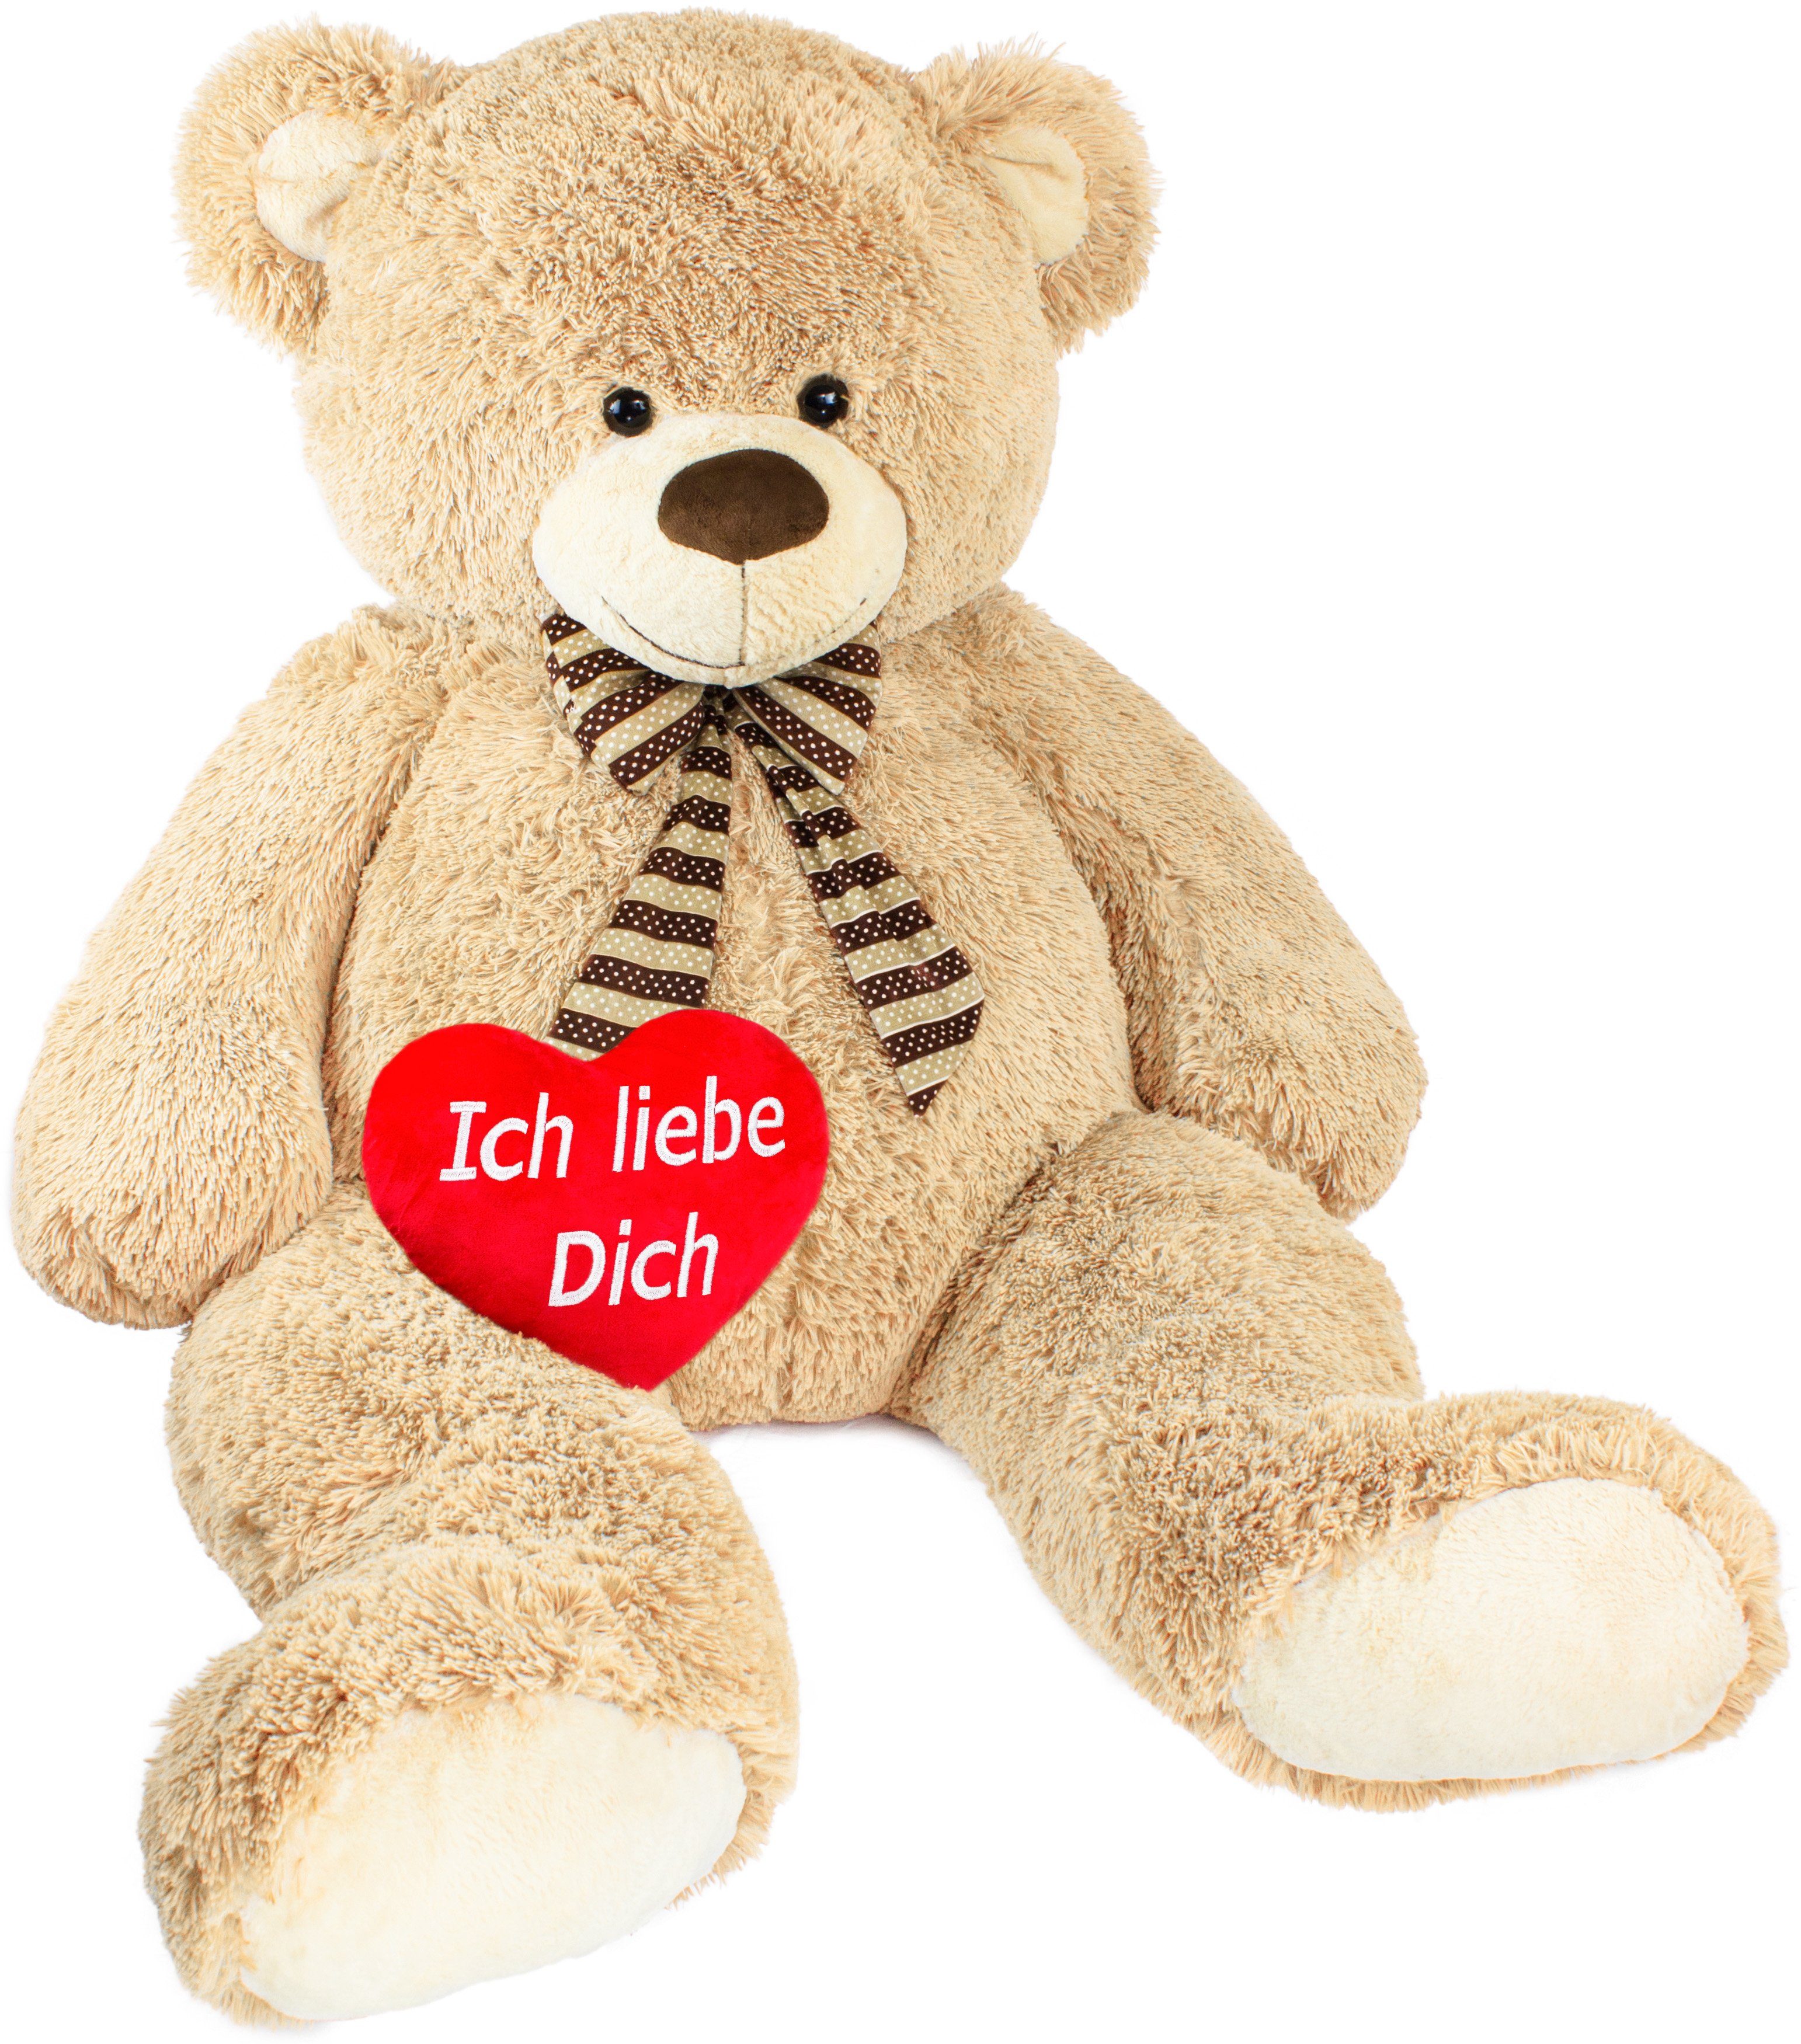 XXL Riesen Teddybär Kuschelbär Kuscheltier Riesen Plüschtier Bär 150cm Rosa Pink 